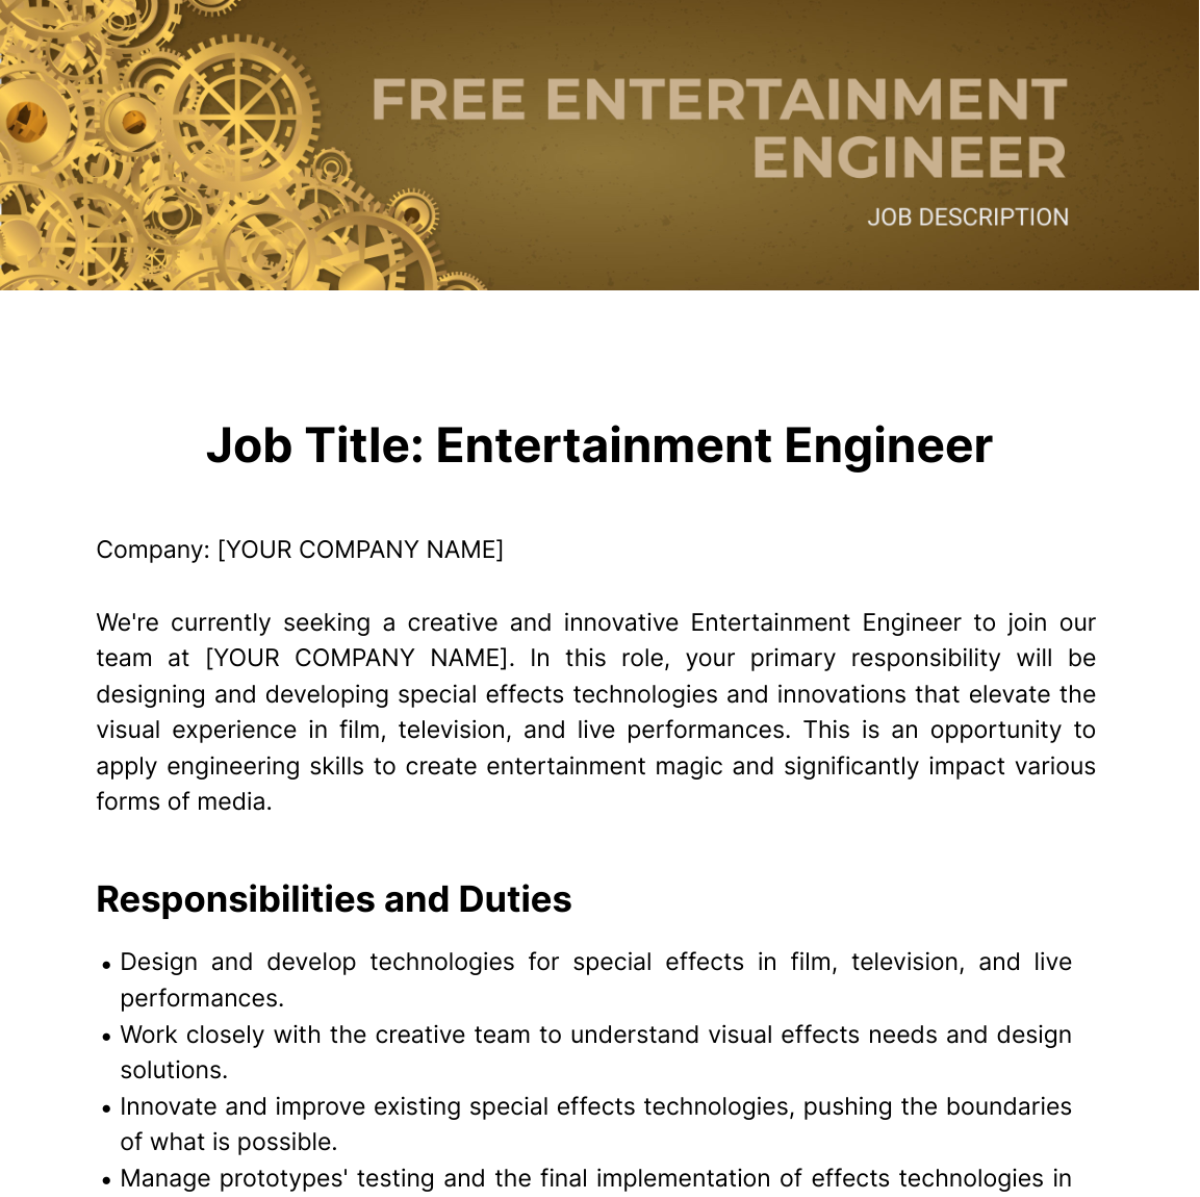 Free Entertainment Engineer Job Description Template